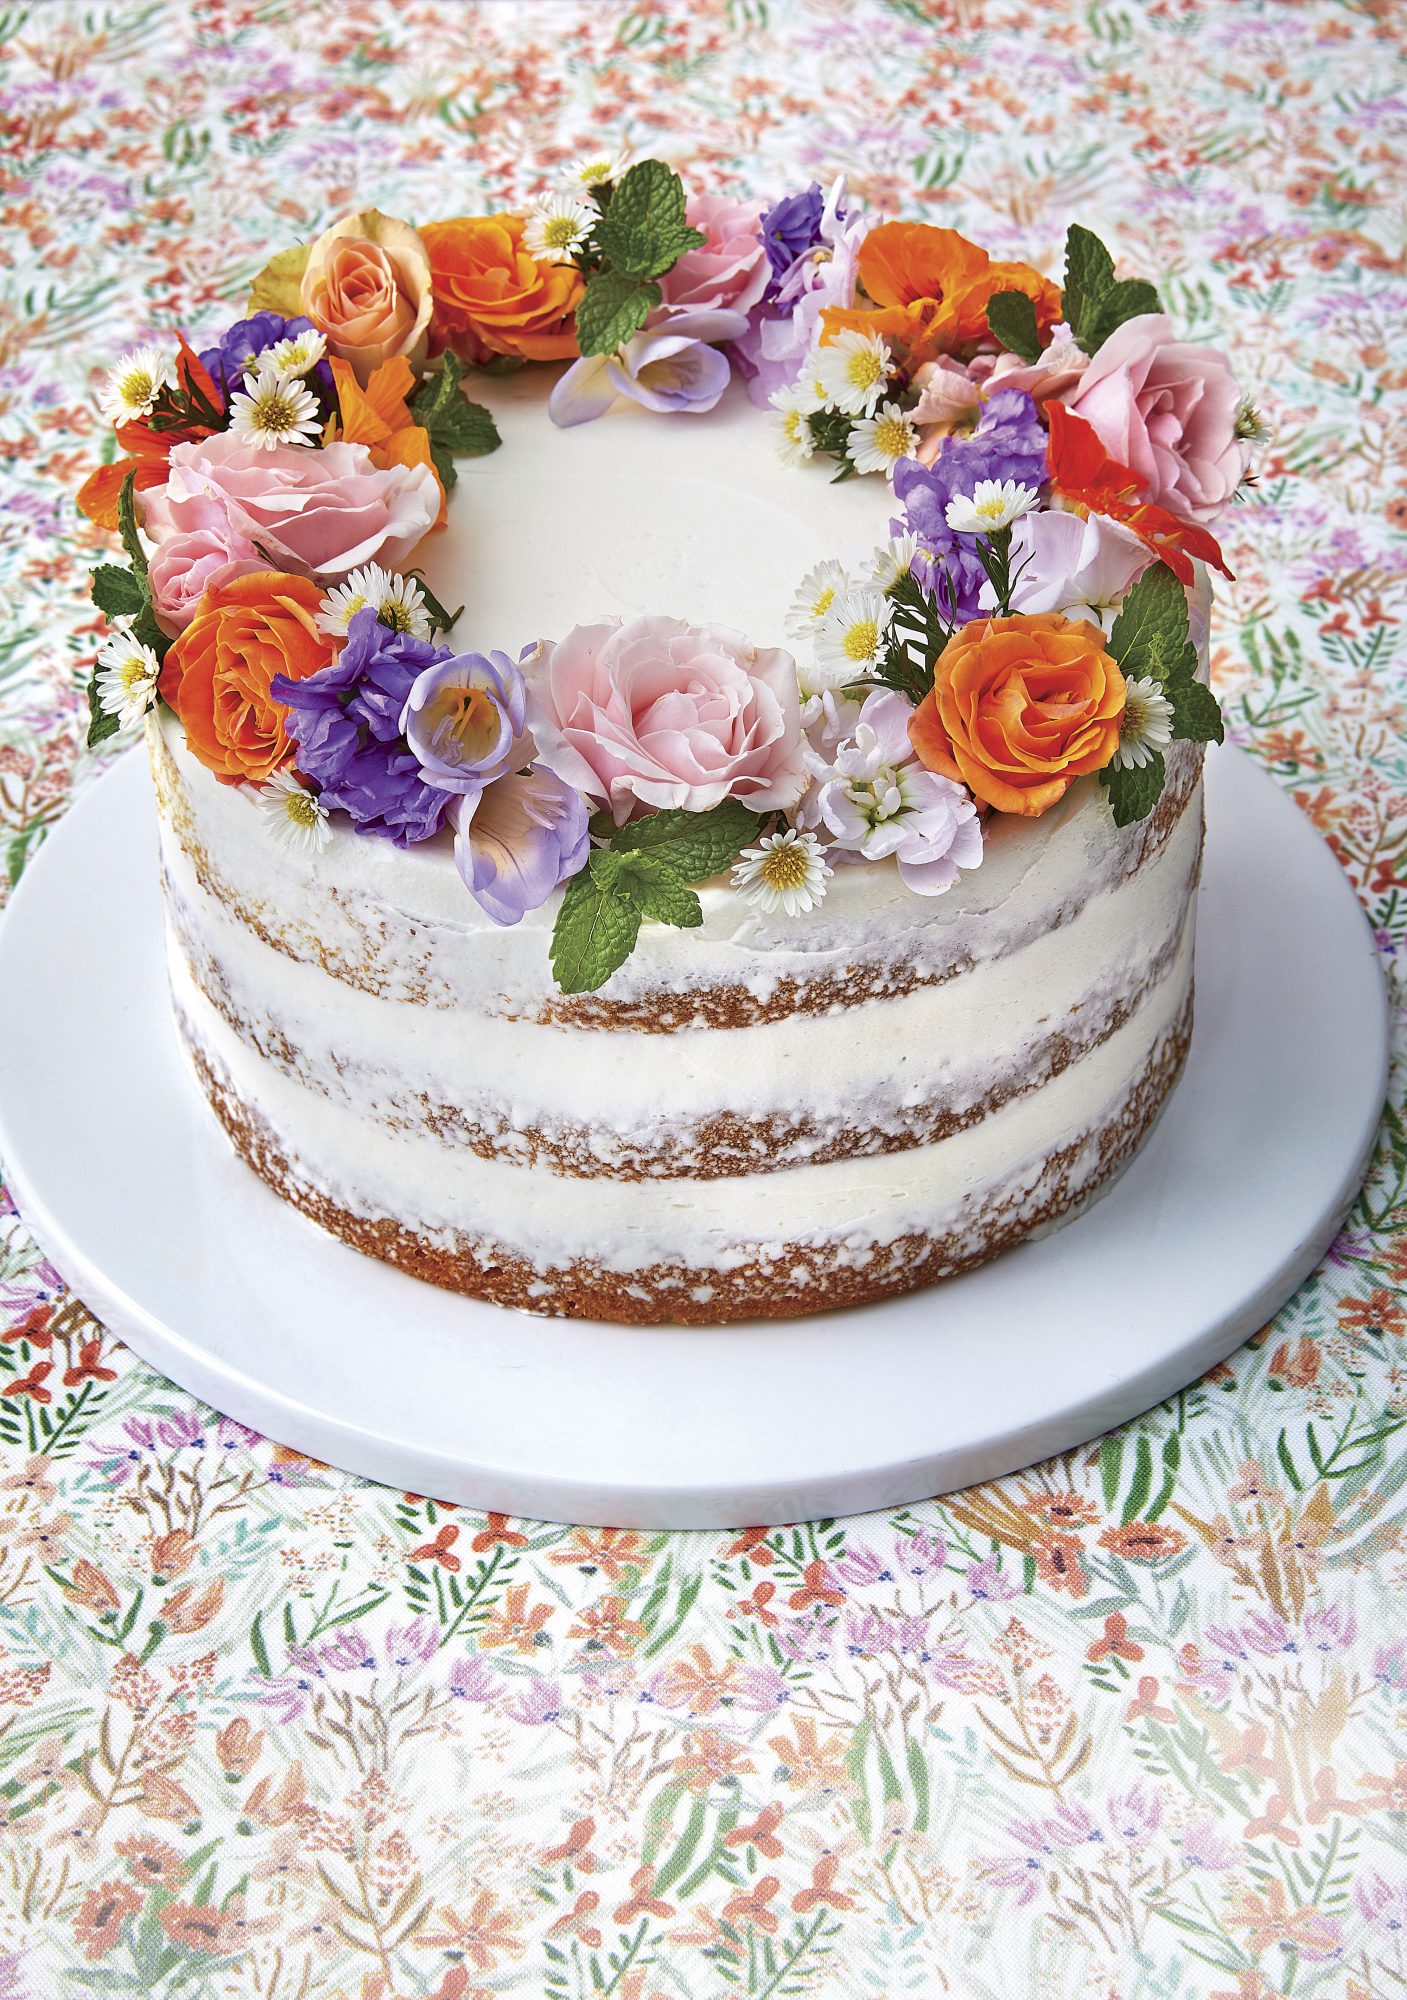 Lemon naked cake recipe with flower crown